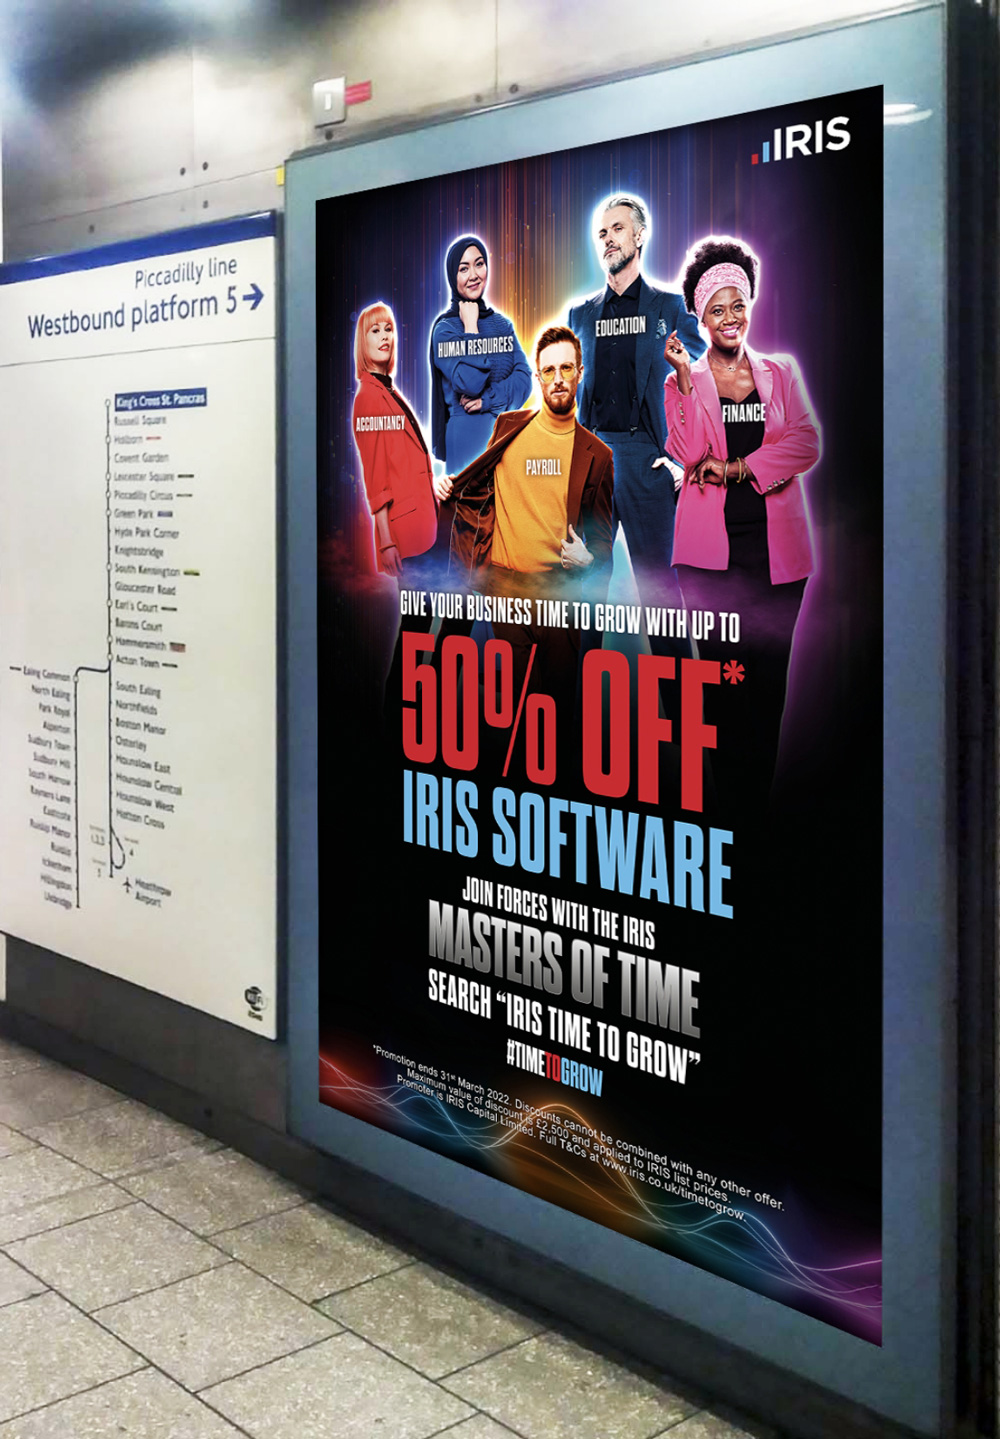 IRIS - Masters of time - London Underground Advertisement